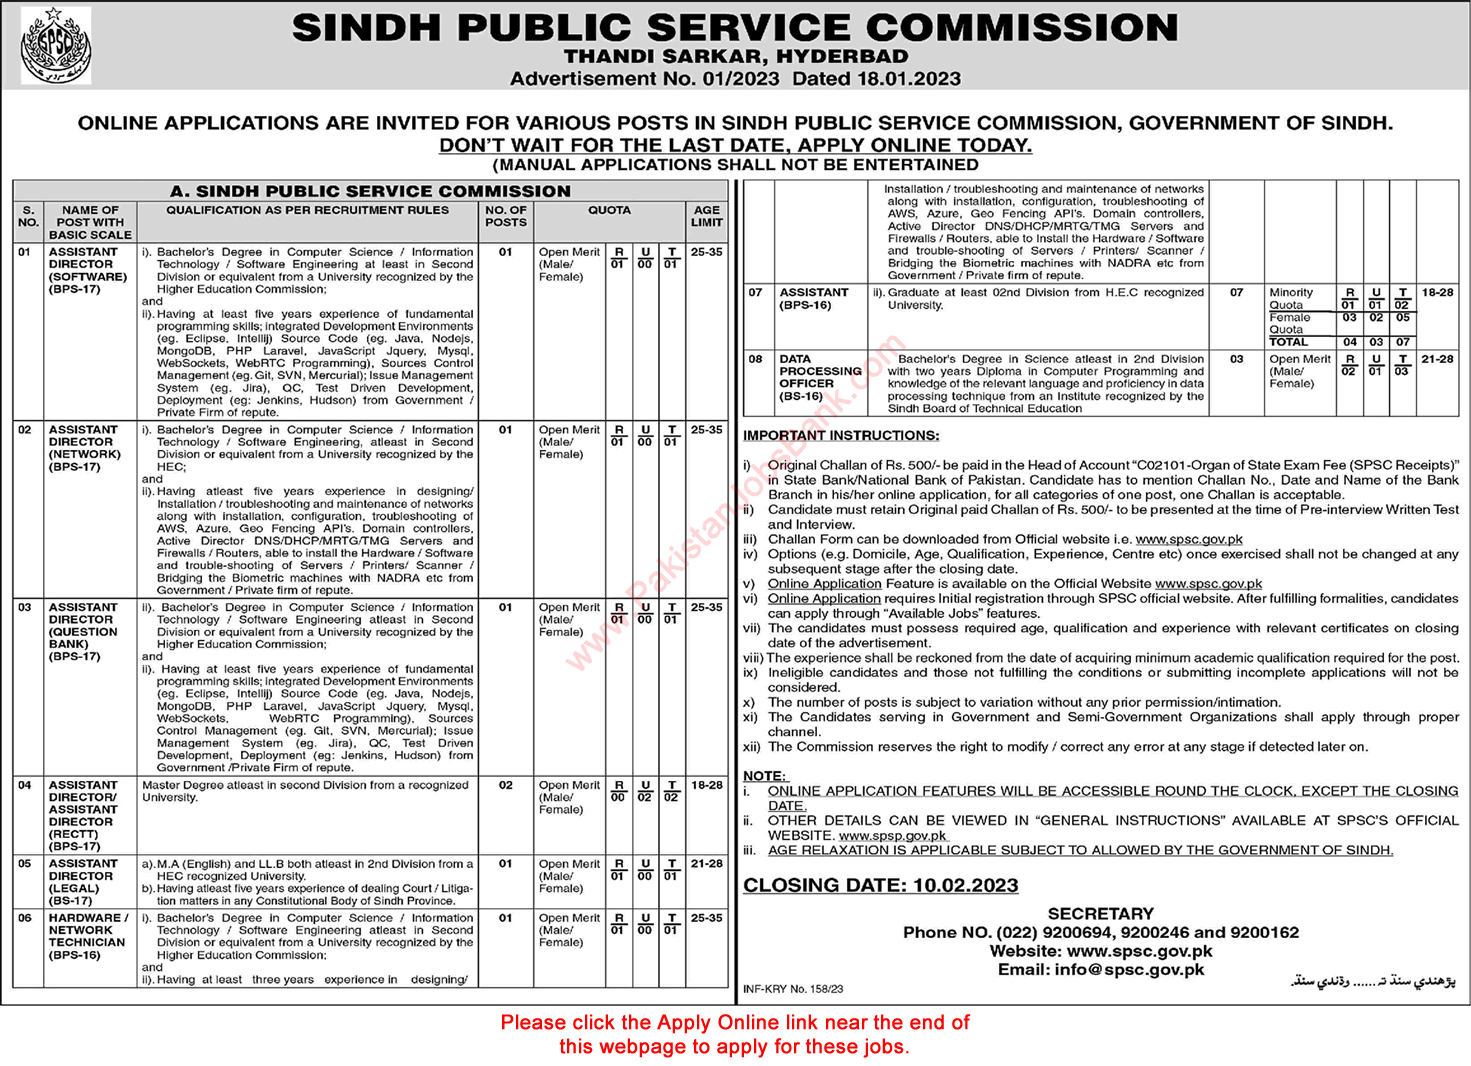 SPSC Jobs 2023 Apply Online Sindh Public Service Commission Latest